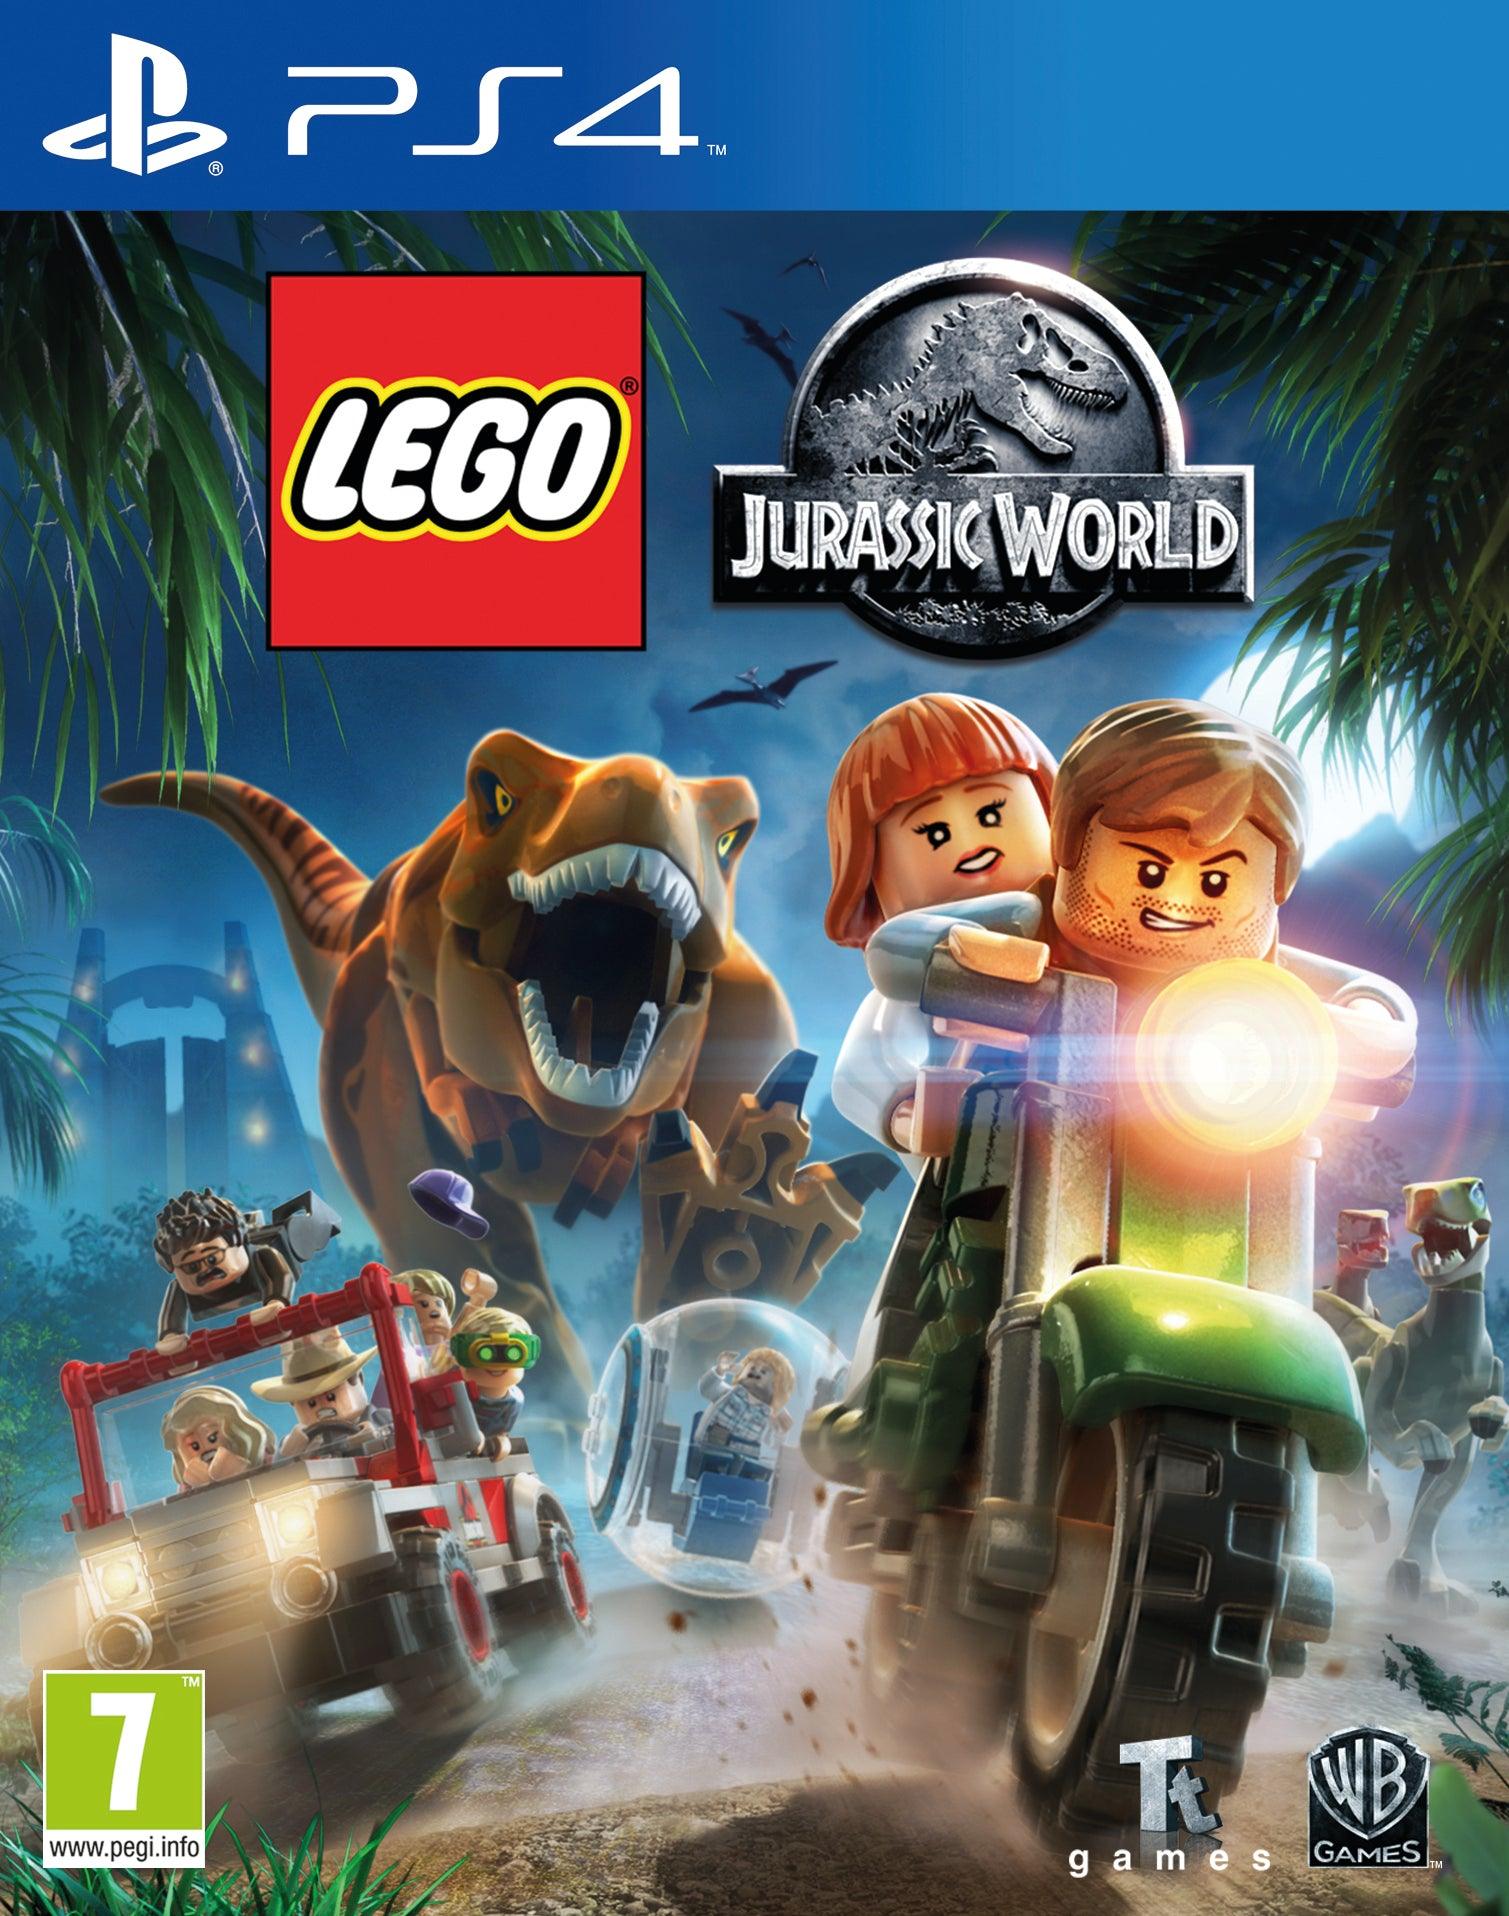 Lego Jurassic World - Want a New Gadget